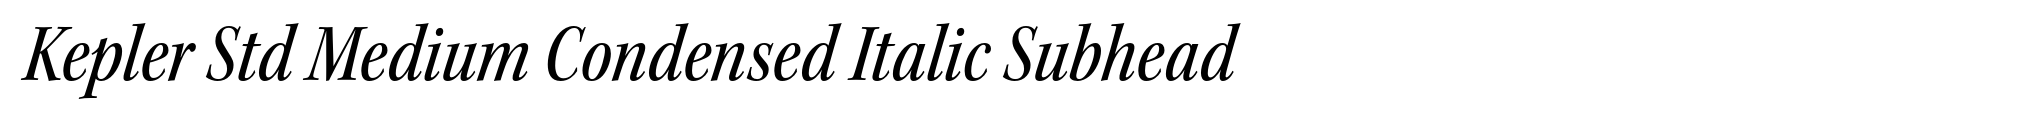 Kepler Std Medium Condensed Italic Subhead image